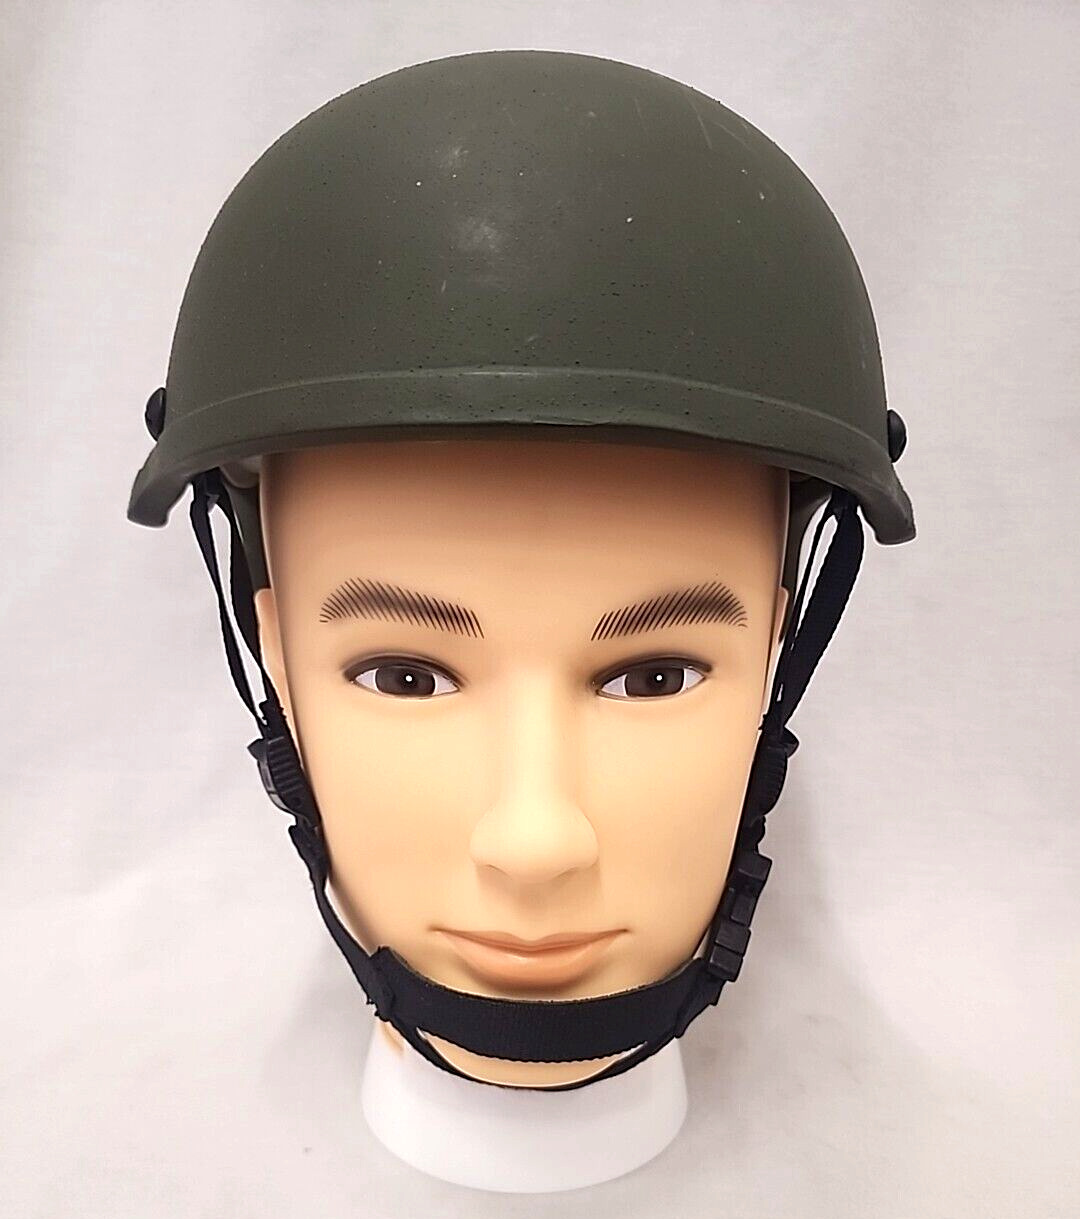 Revision PTH-IIIA High Large OD Green Ballistic Helmet Cag Sof Devgru Seal